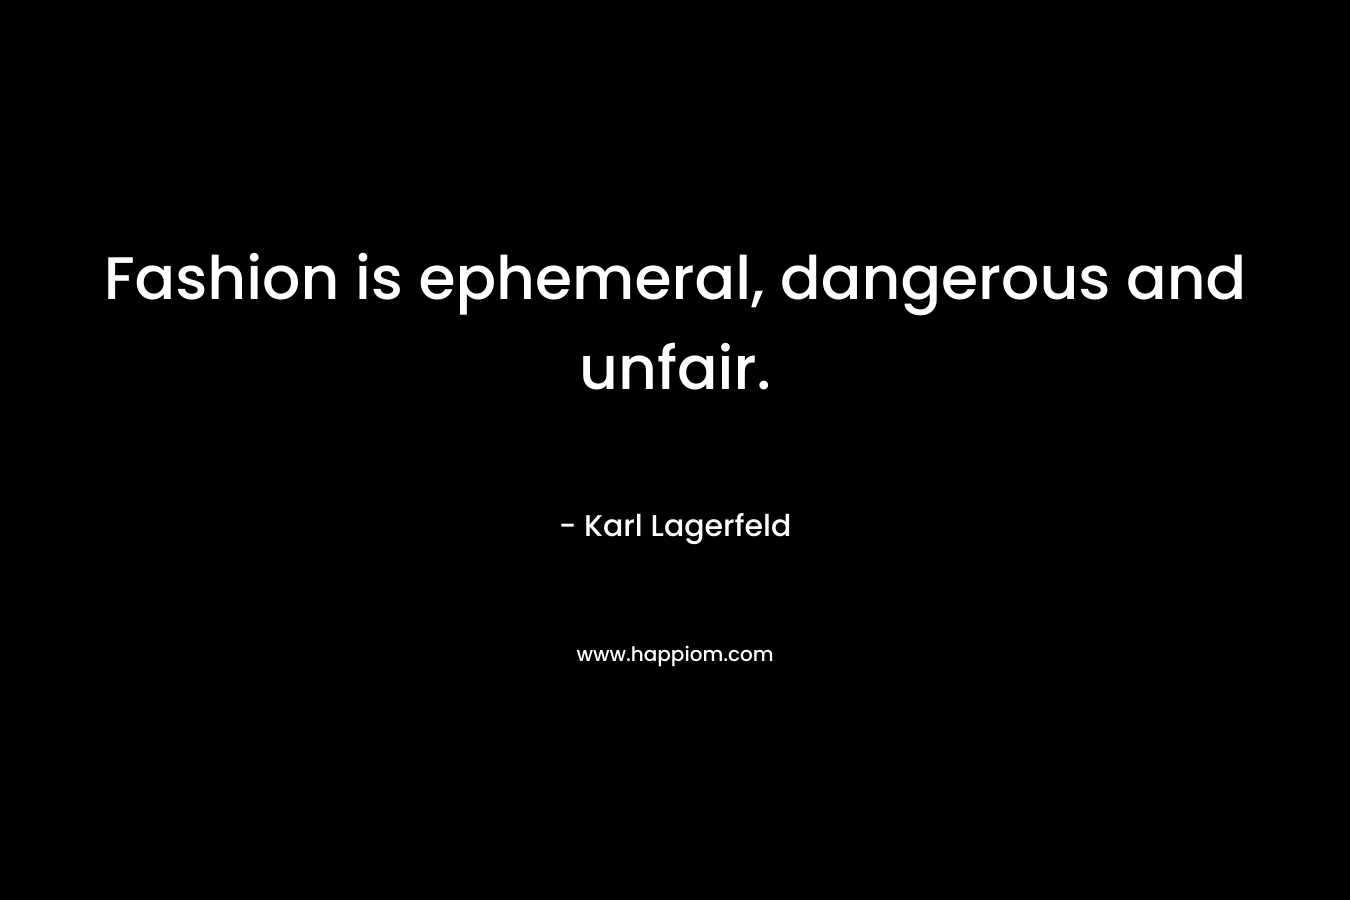 Fashion is ephemeral, dangerous and unfair.